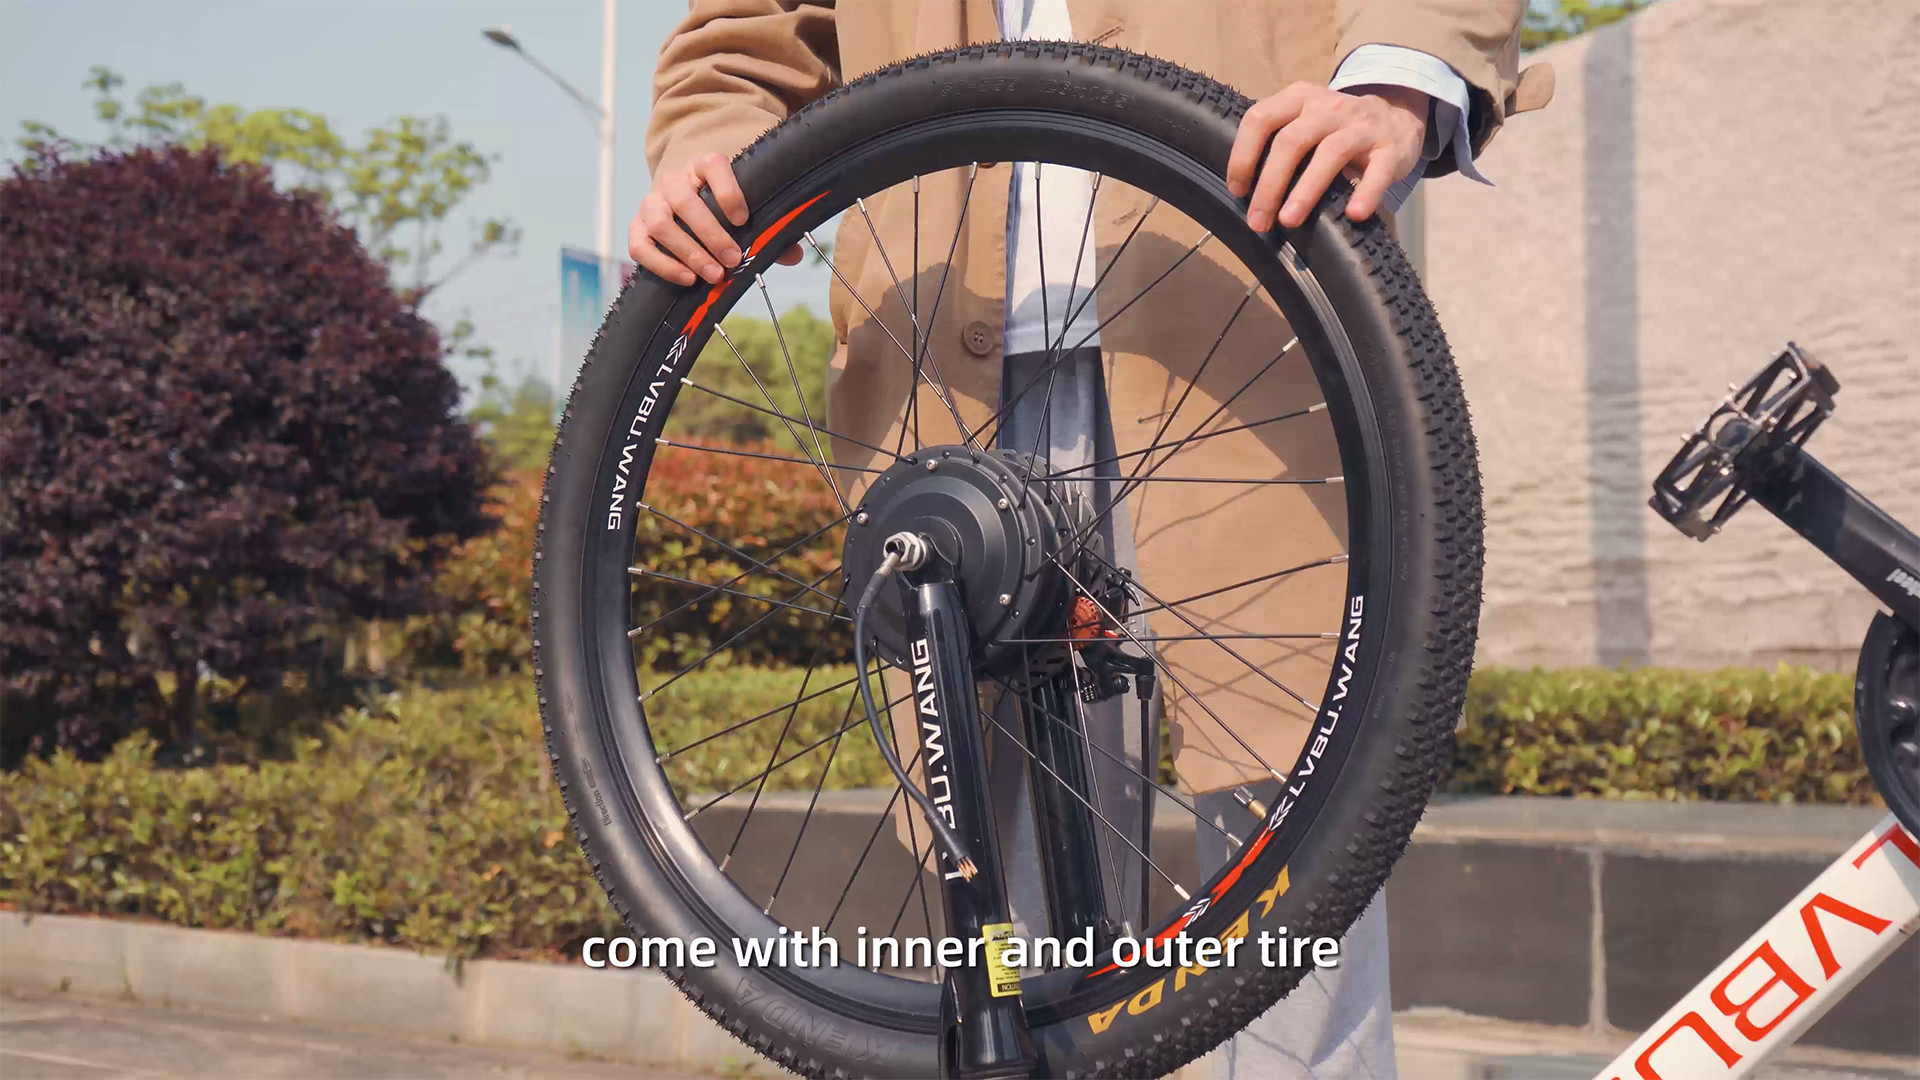 Is the Lvbu front wheel bike kit unsafe?